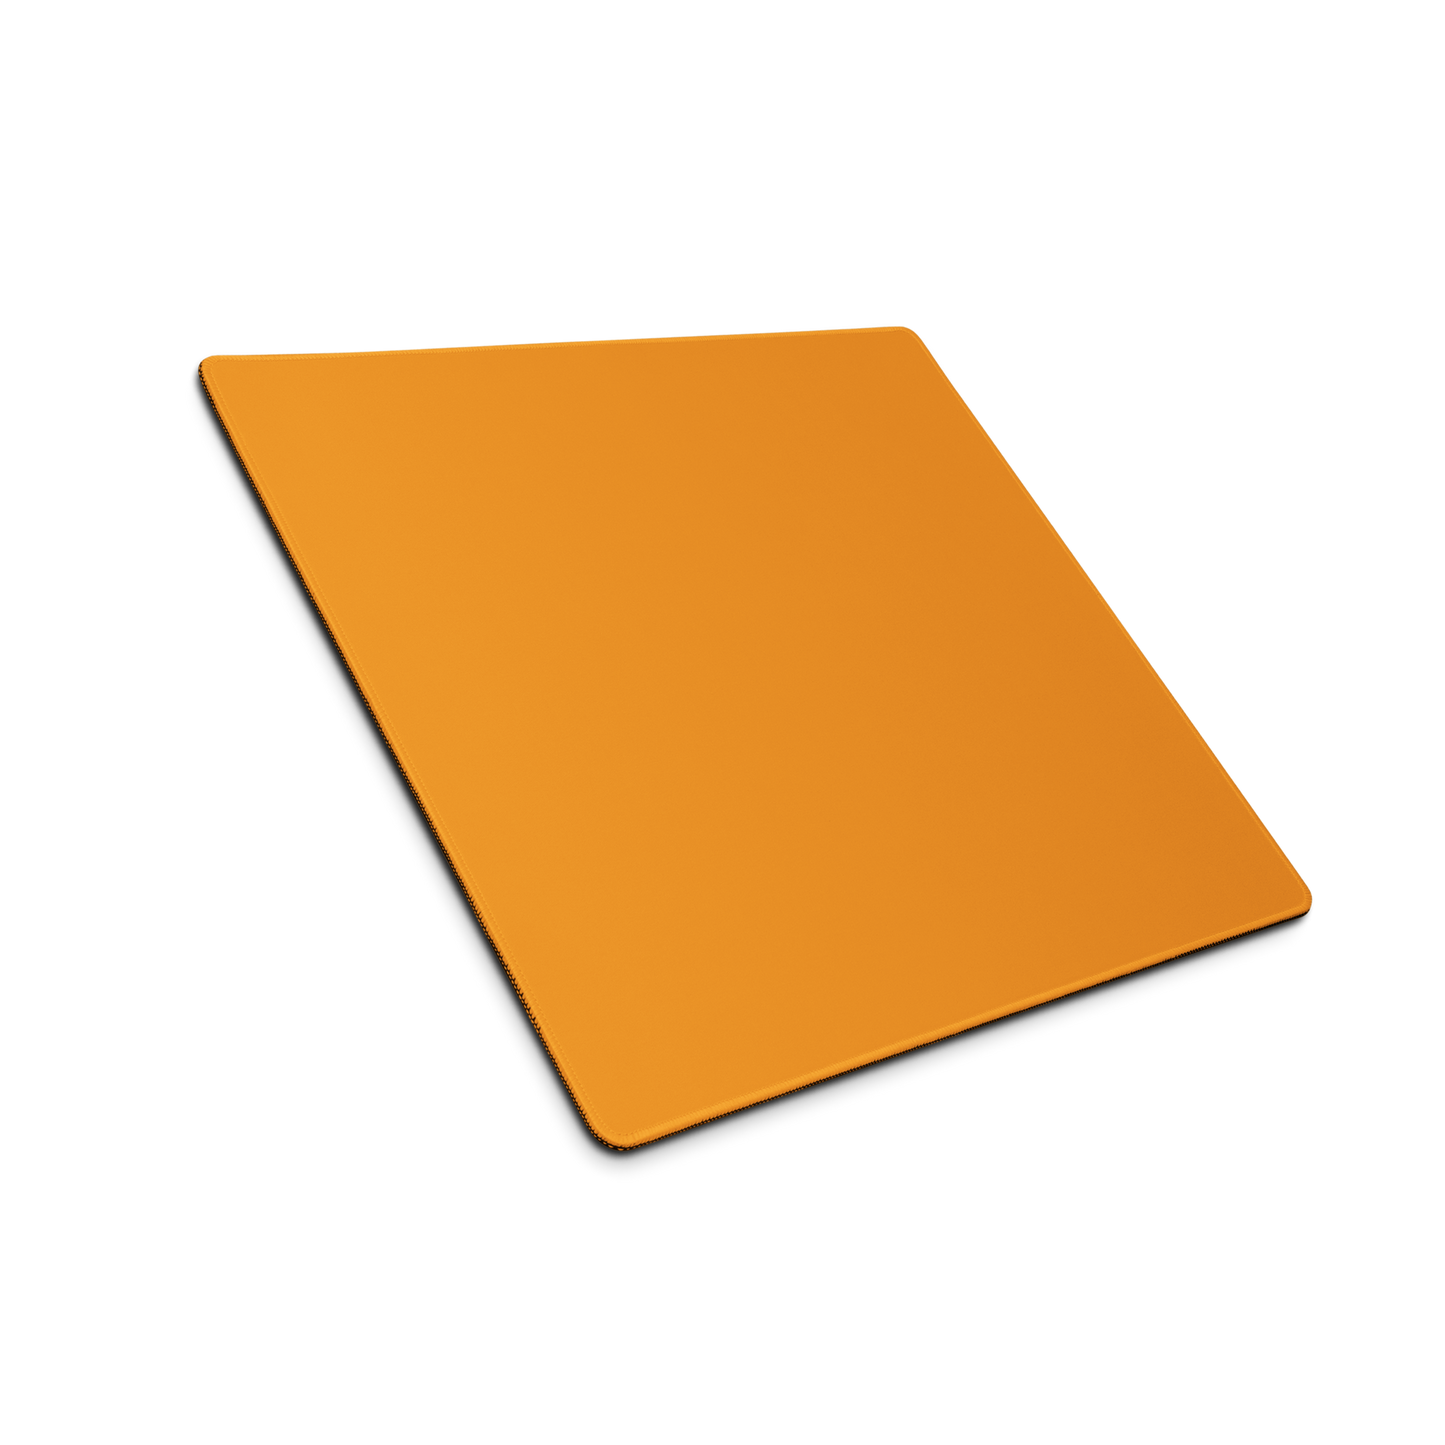 Orange Desk Pad -  Pantone 137